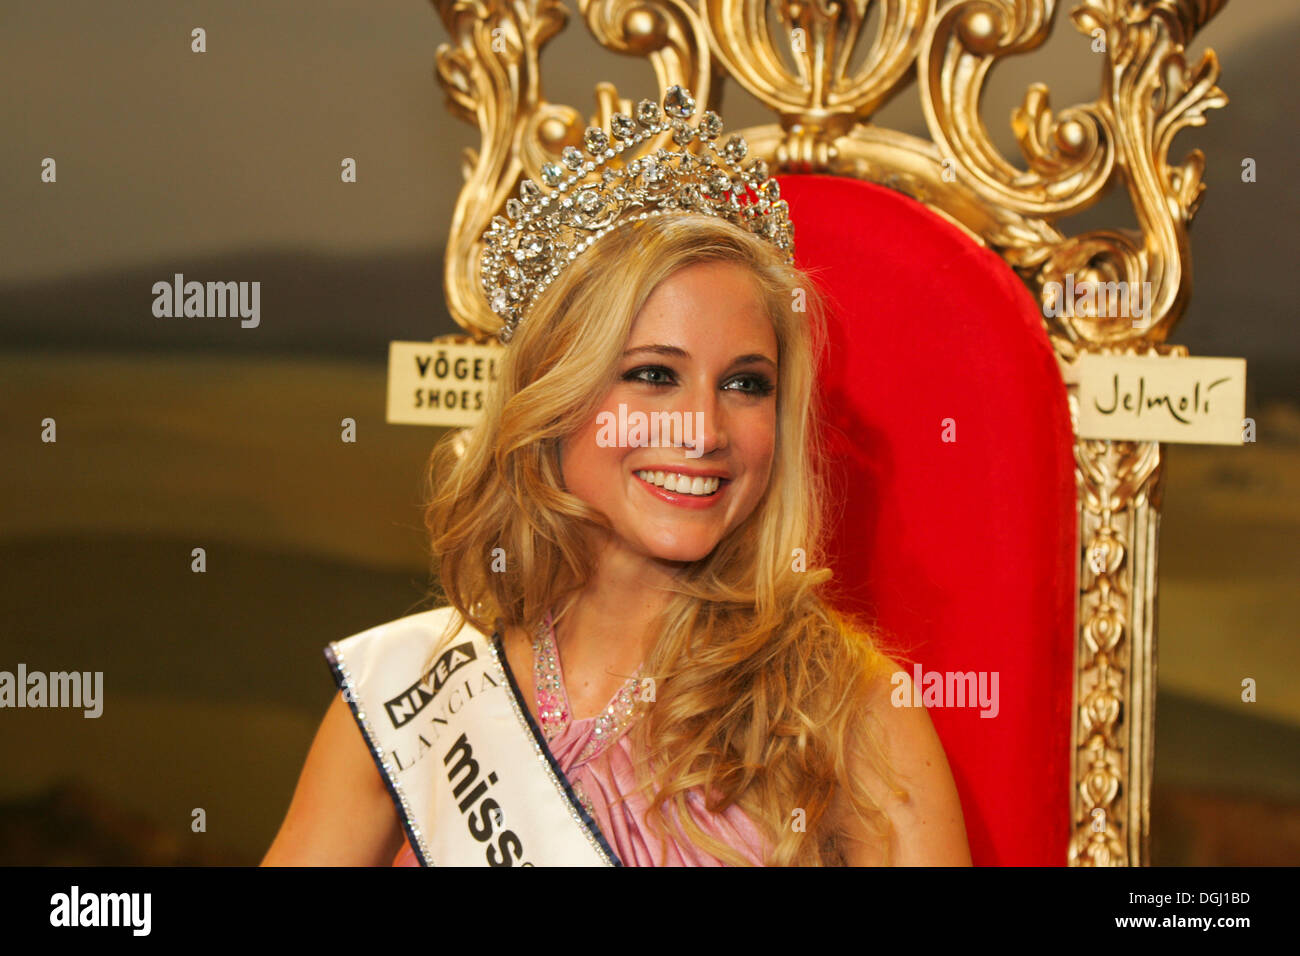 Fiona Hefti winner of the Miss Switzerland 2004 beauty pageant in Zurich, Switzerland Stock Photo